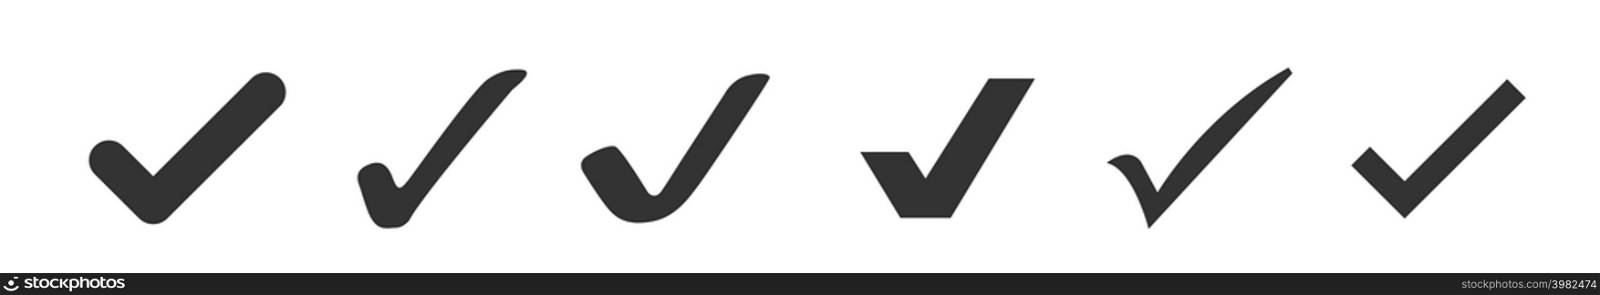 Check mark icons set isolated on white background. Vector illustration. Check mark icons set isolated on white background.